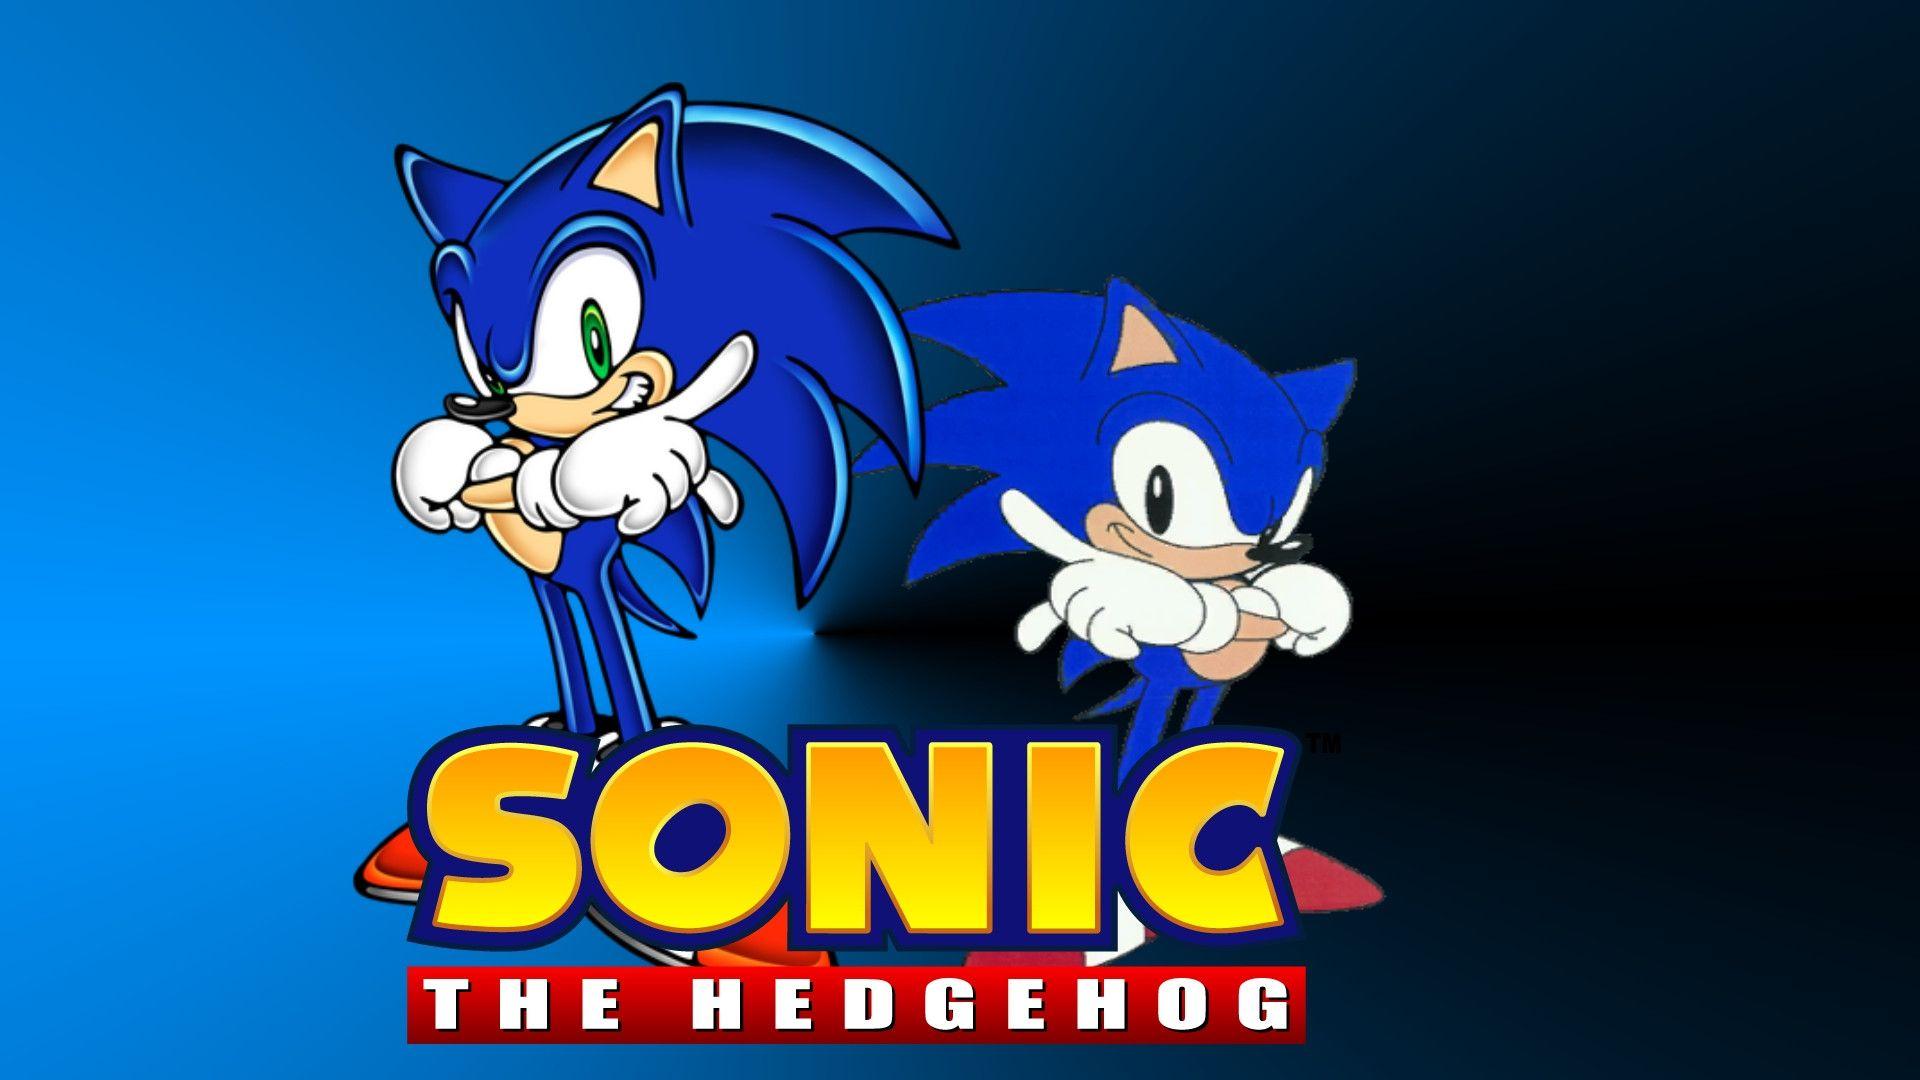 Sonic the hedgehog wallpaper